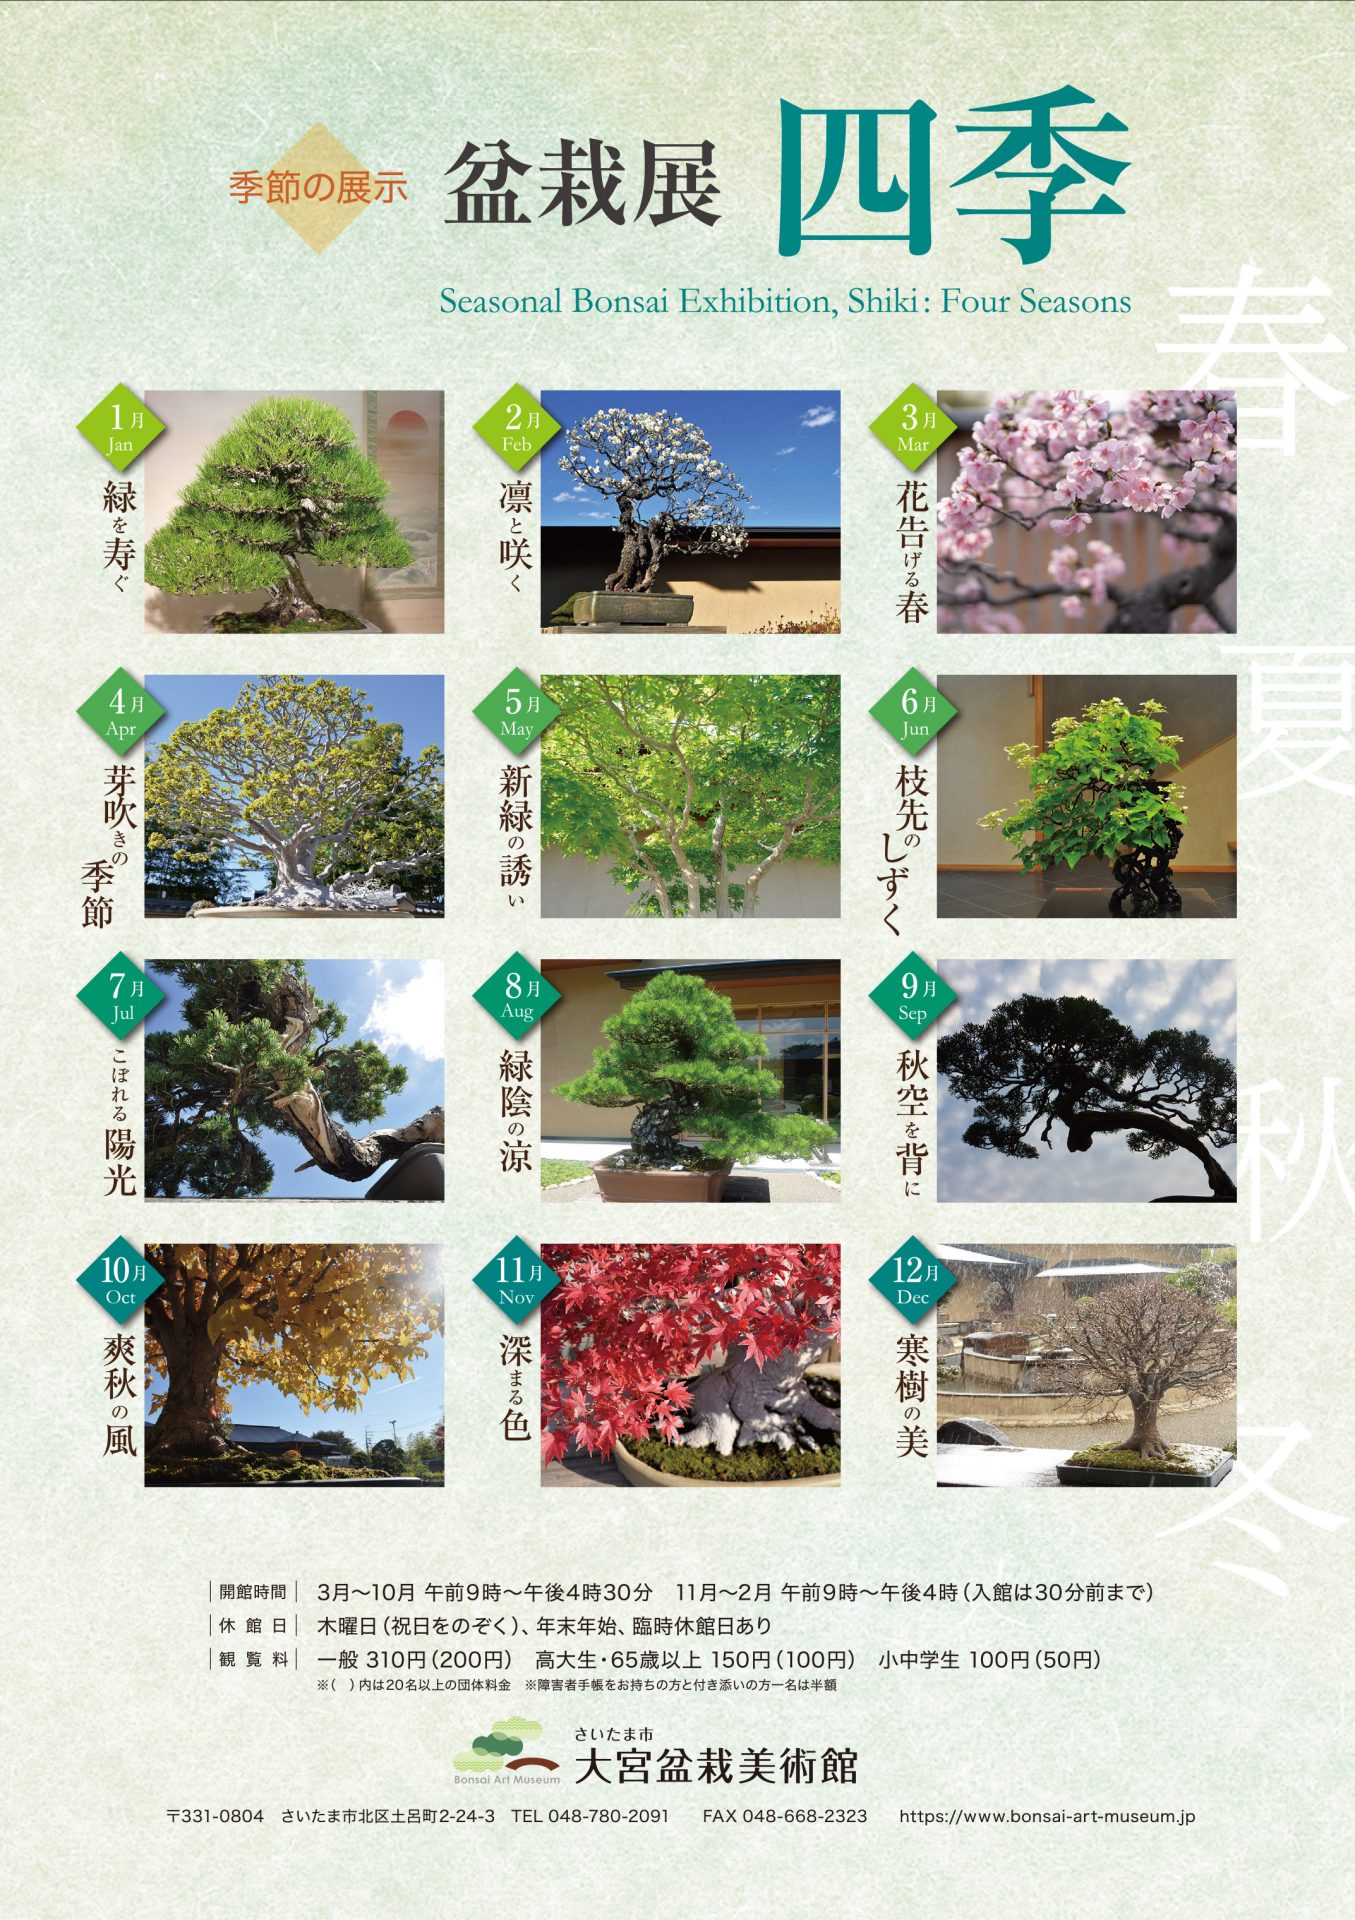 Seasonal Bonsai Exhibition, Shiki: Four Seasons, May, Invitation to Fresh Greenery